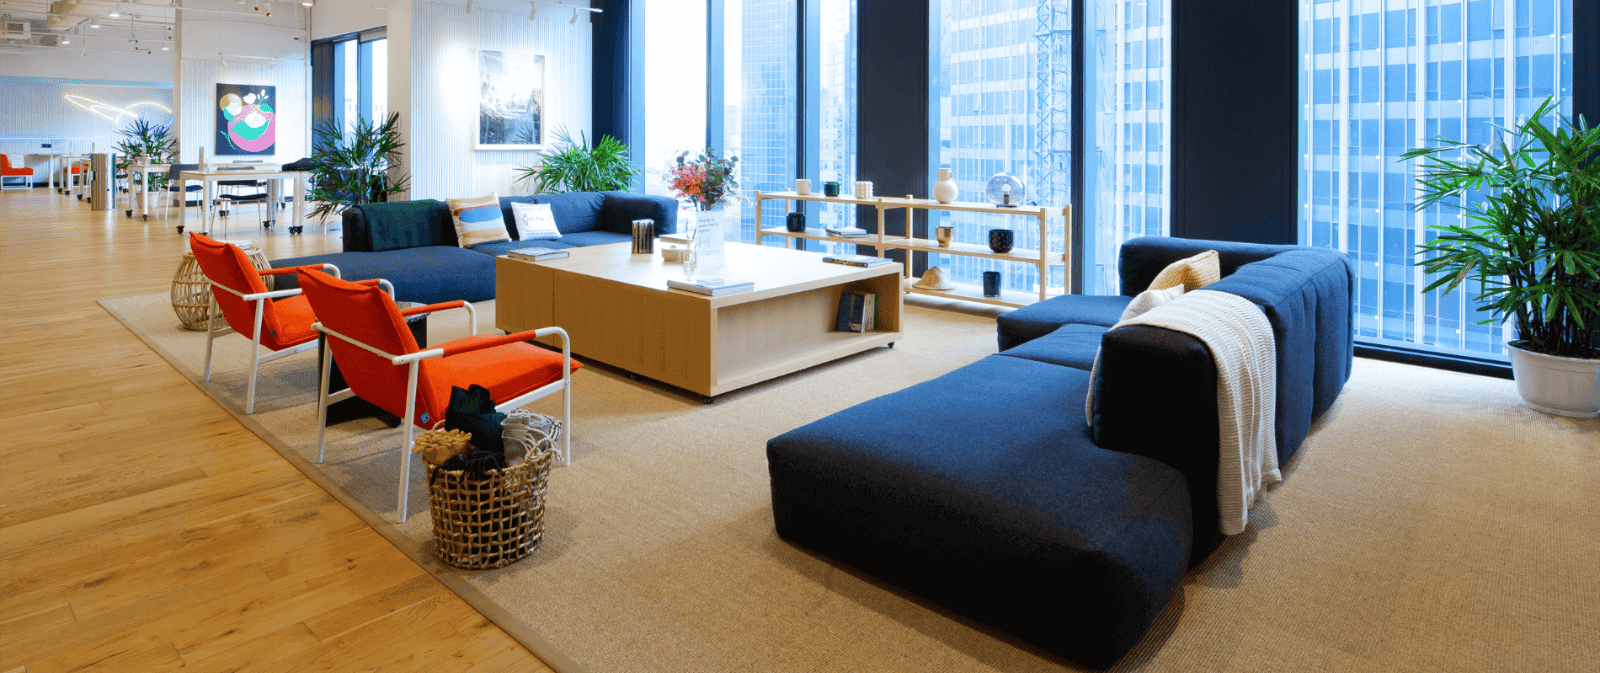 office interior design - commute worthy workplace